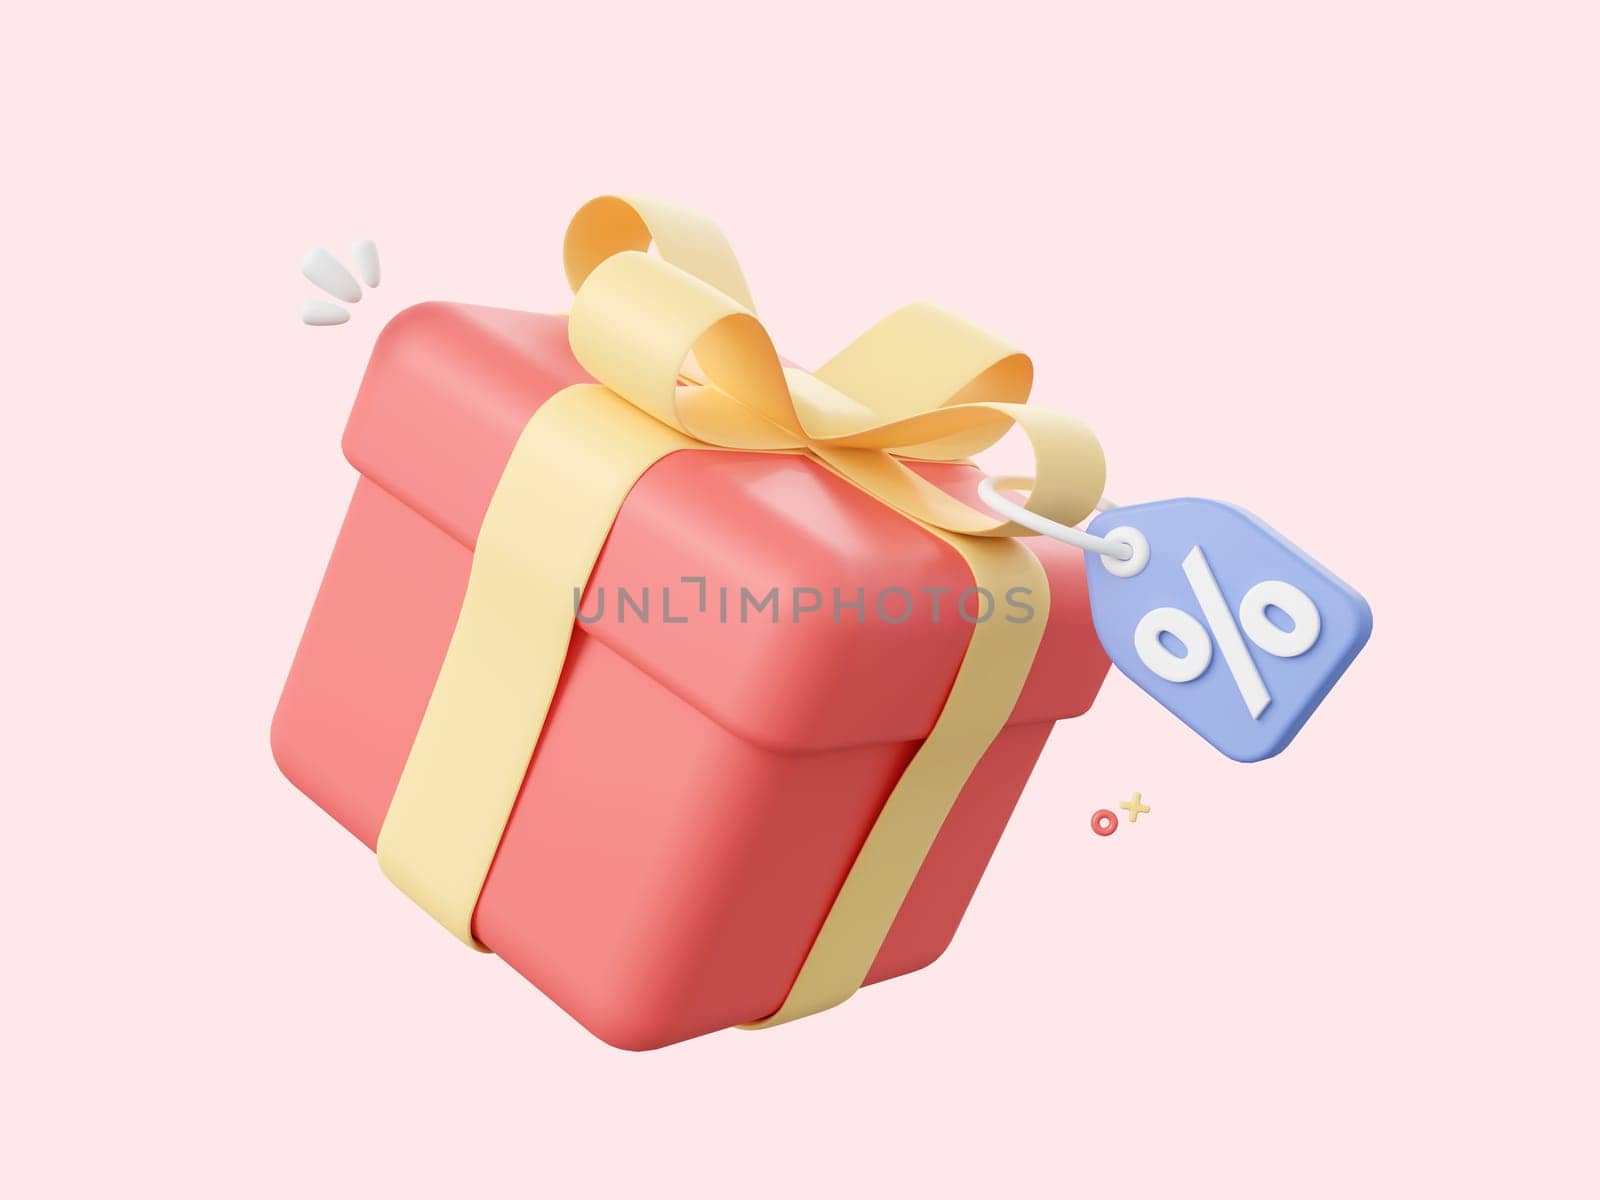 3d cartoon design illustration of Gift box with discount tag. by nutzchotwarut